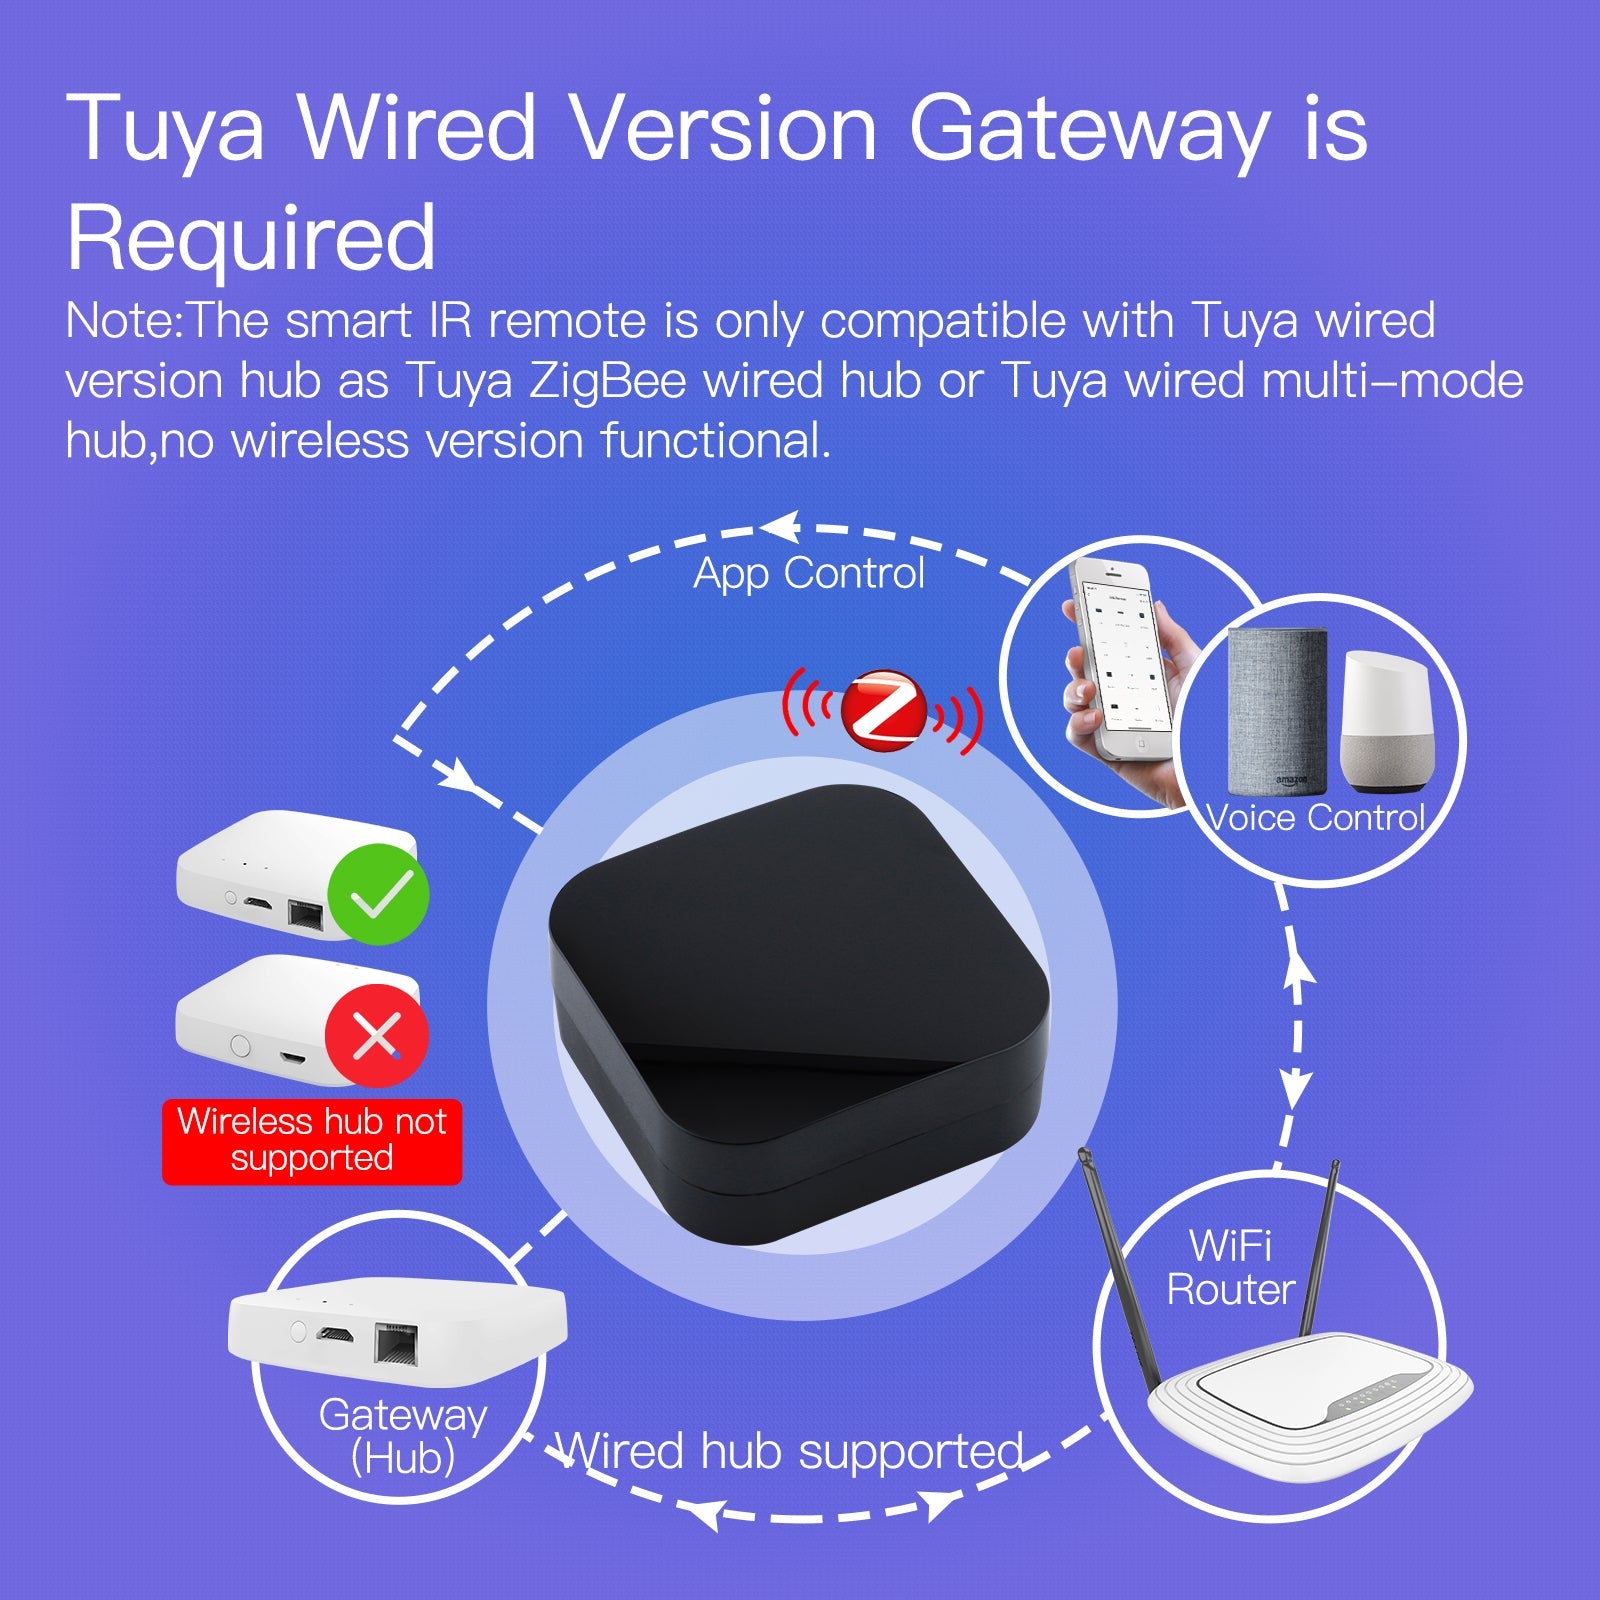 MOES Tuya Zigbee 3.0 Hub Gateway,WiFi Smart Home Bridge Wireless Remote  Controller, Work with All Tuya ZigBee3.0 Smart Products (2.4G WiFi)，2MQTT  ，White 